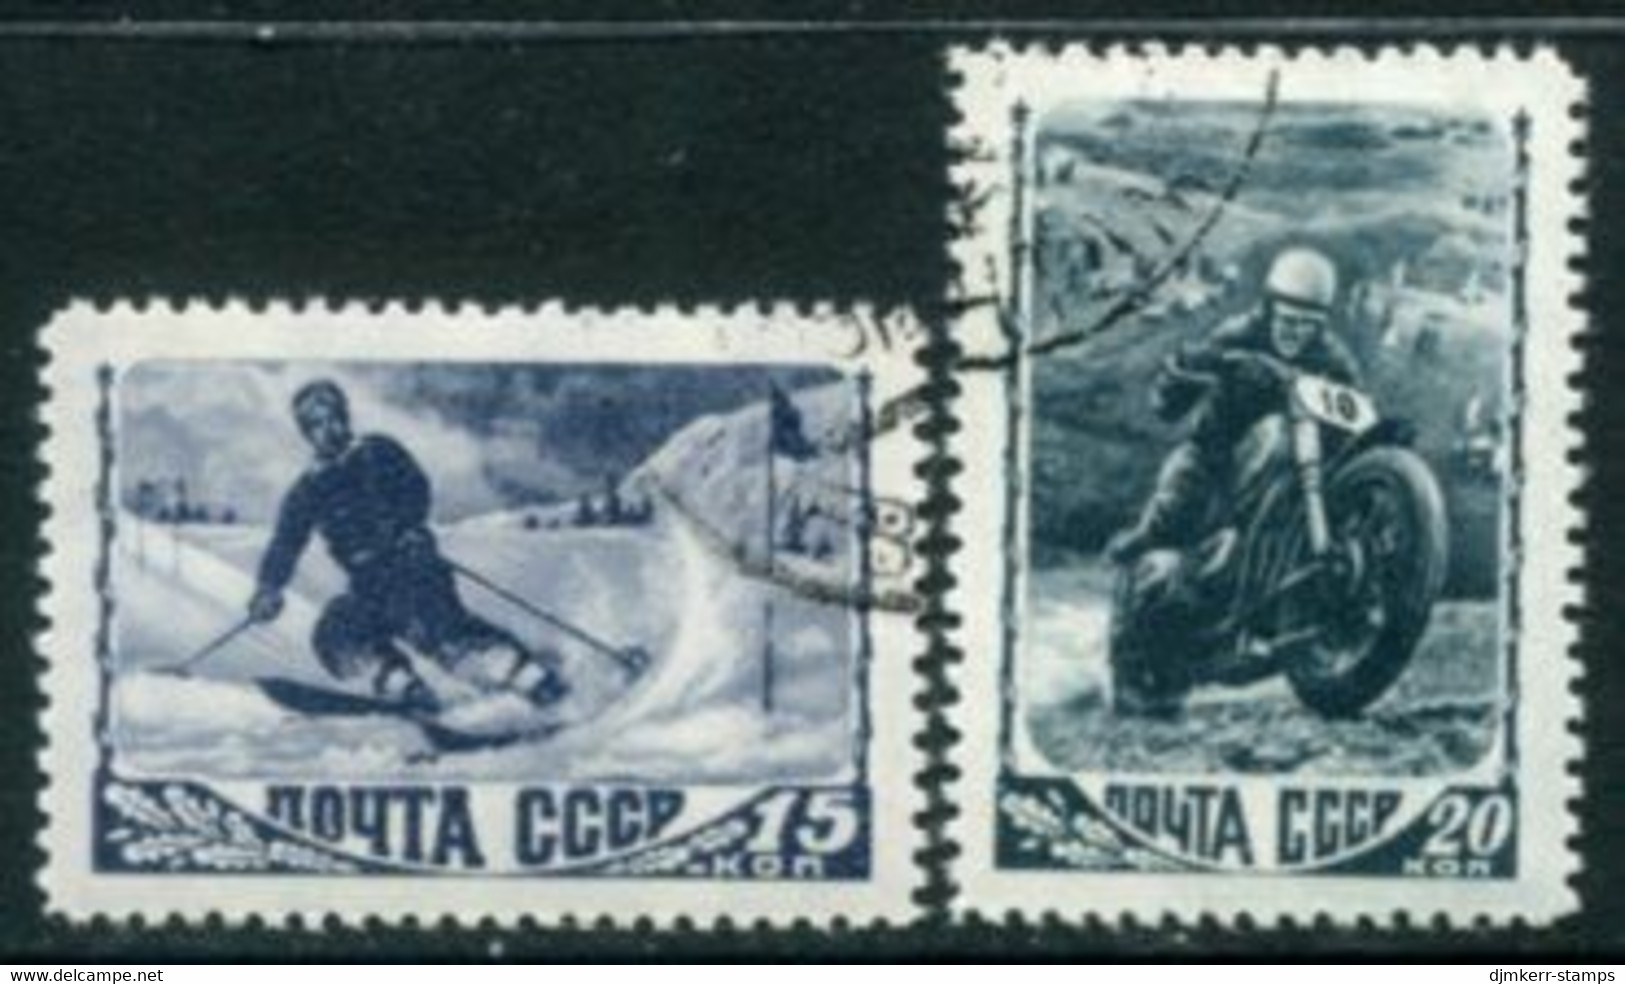 SOVIET UNION 1948 Sports I Used.  Michel  1192-93 - Gebraucht